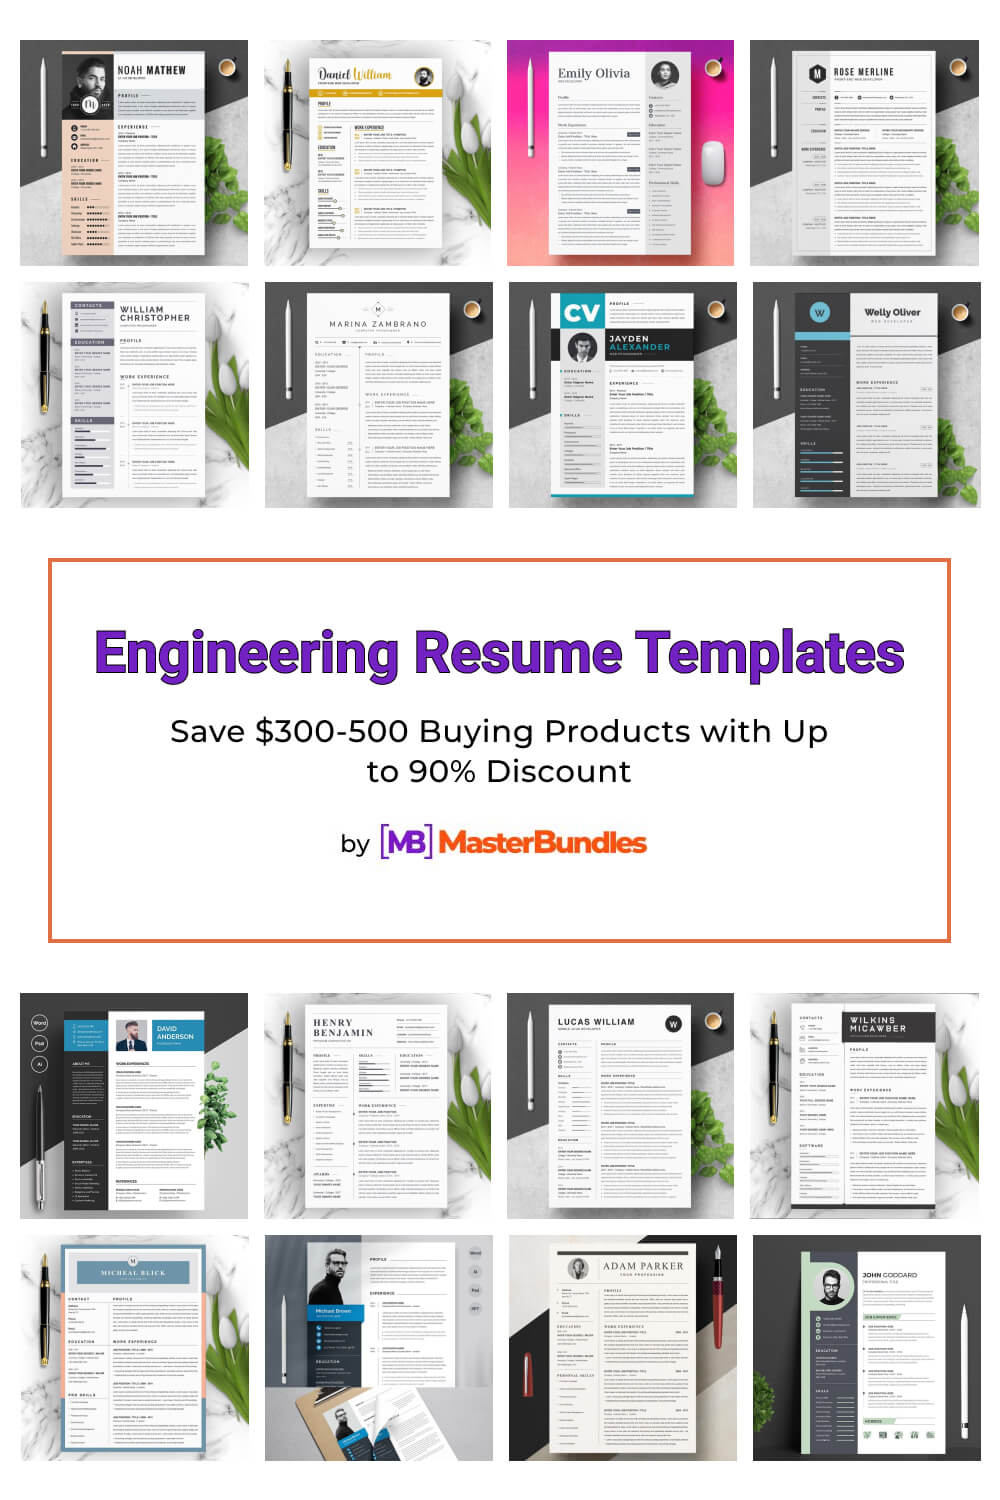 engineering resume templates pinterest image.